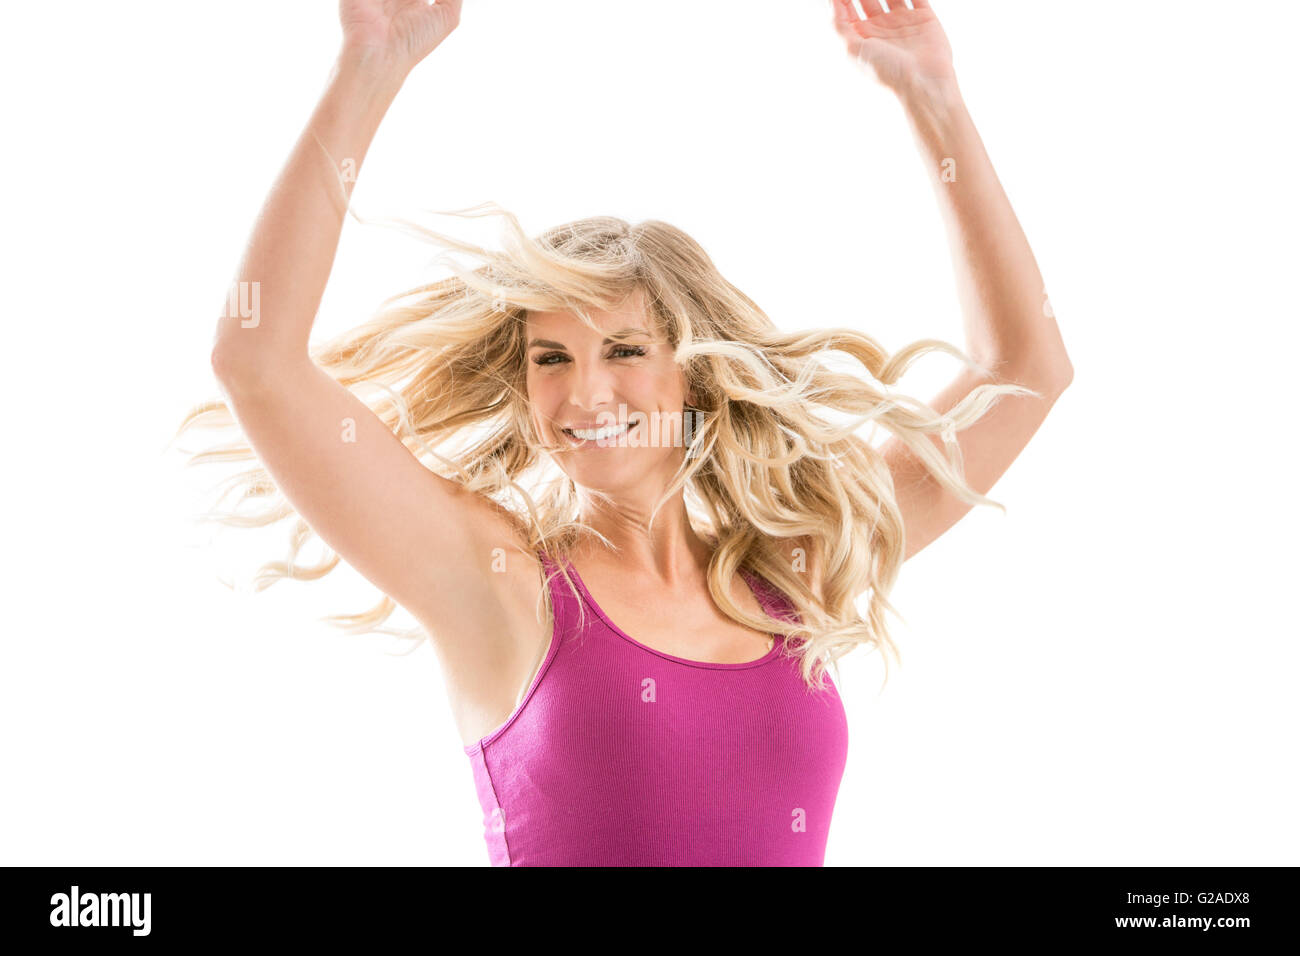 Smiling blonde woman dancing Stock Photo